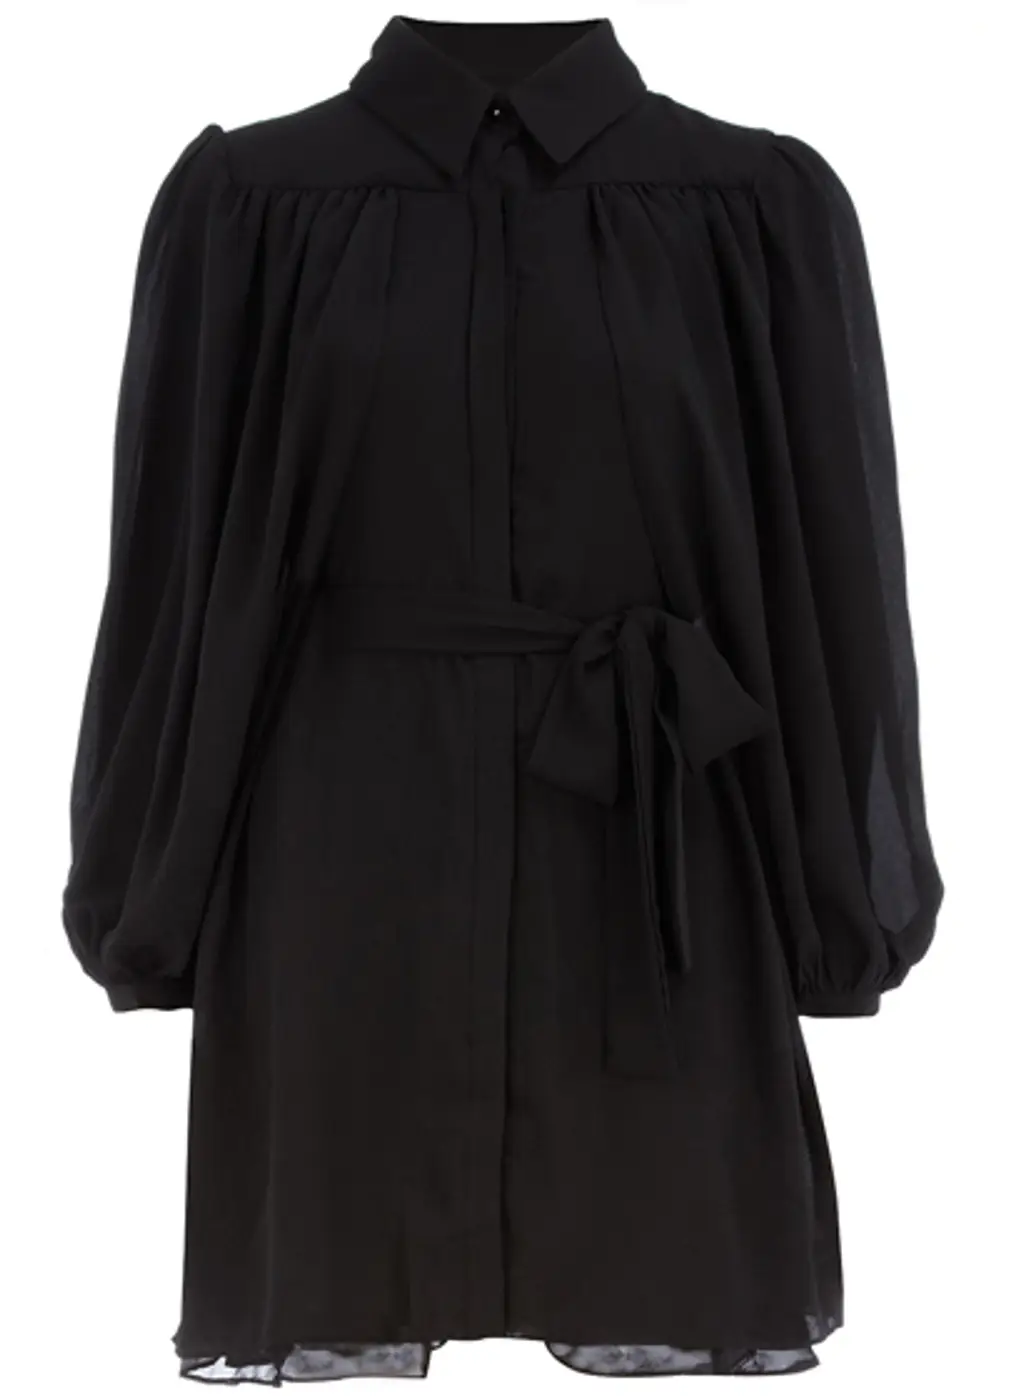 Dorothy Perkins Black Sleeved Collar Dress